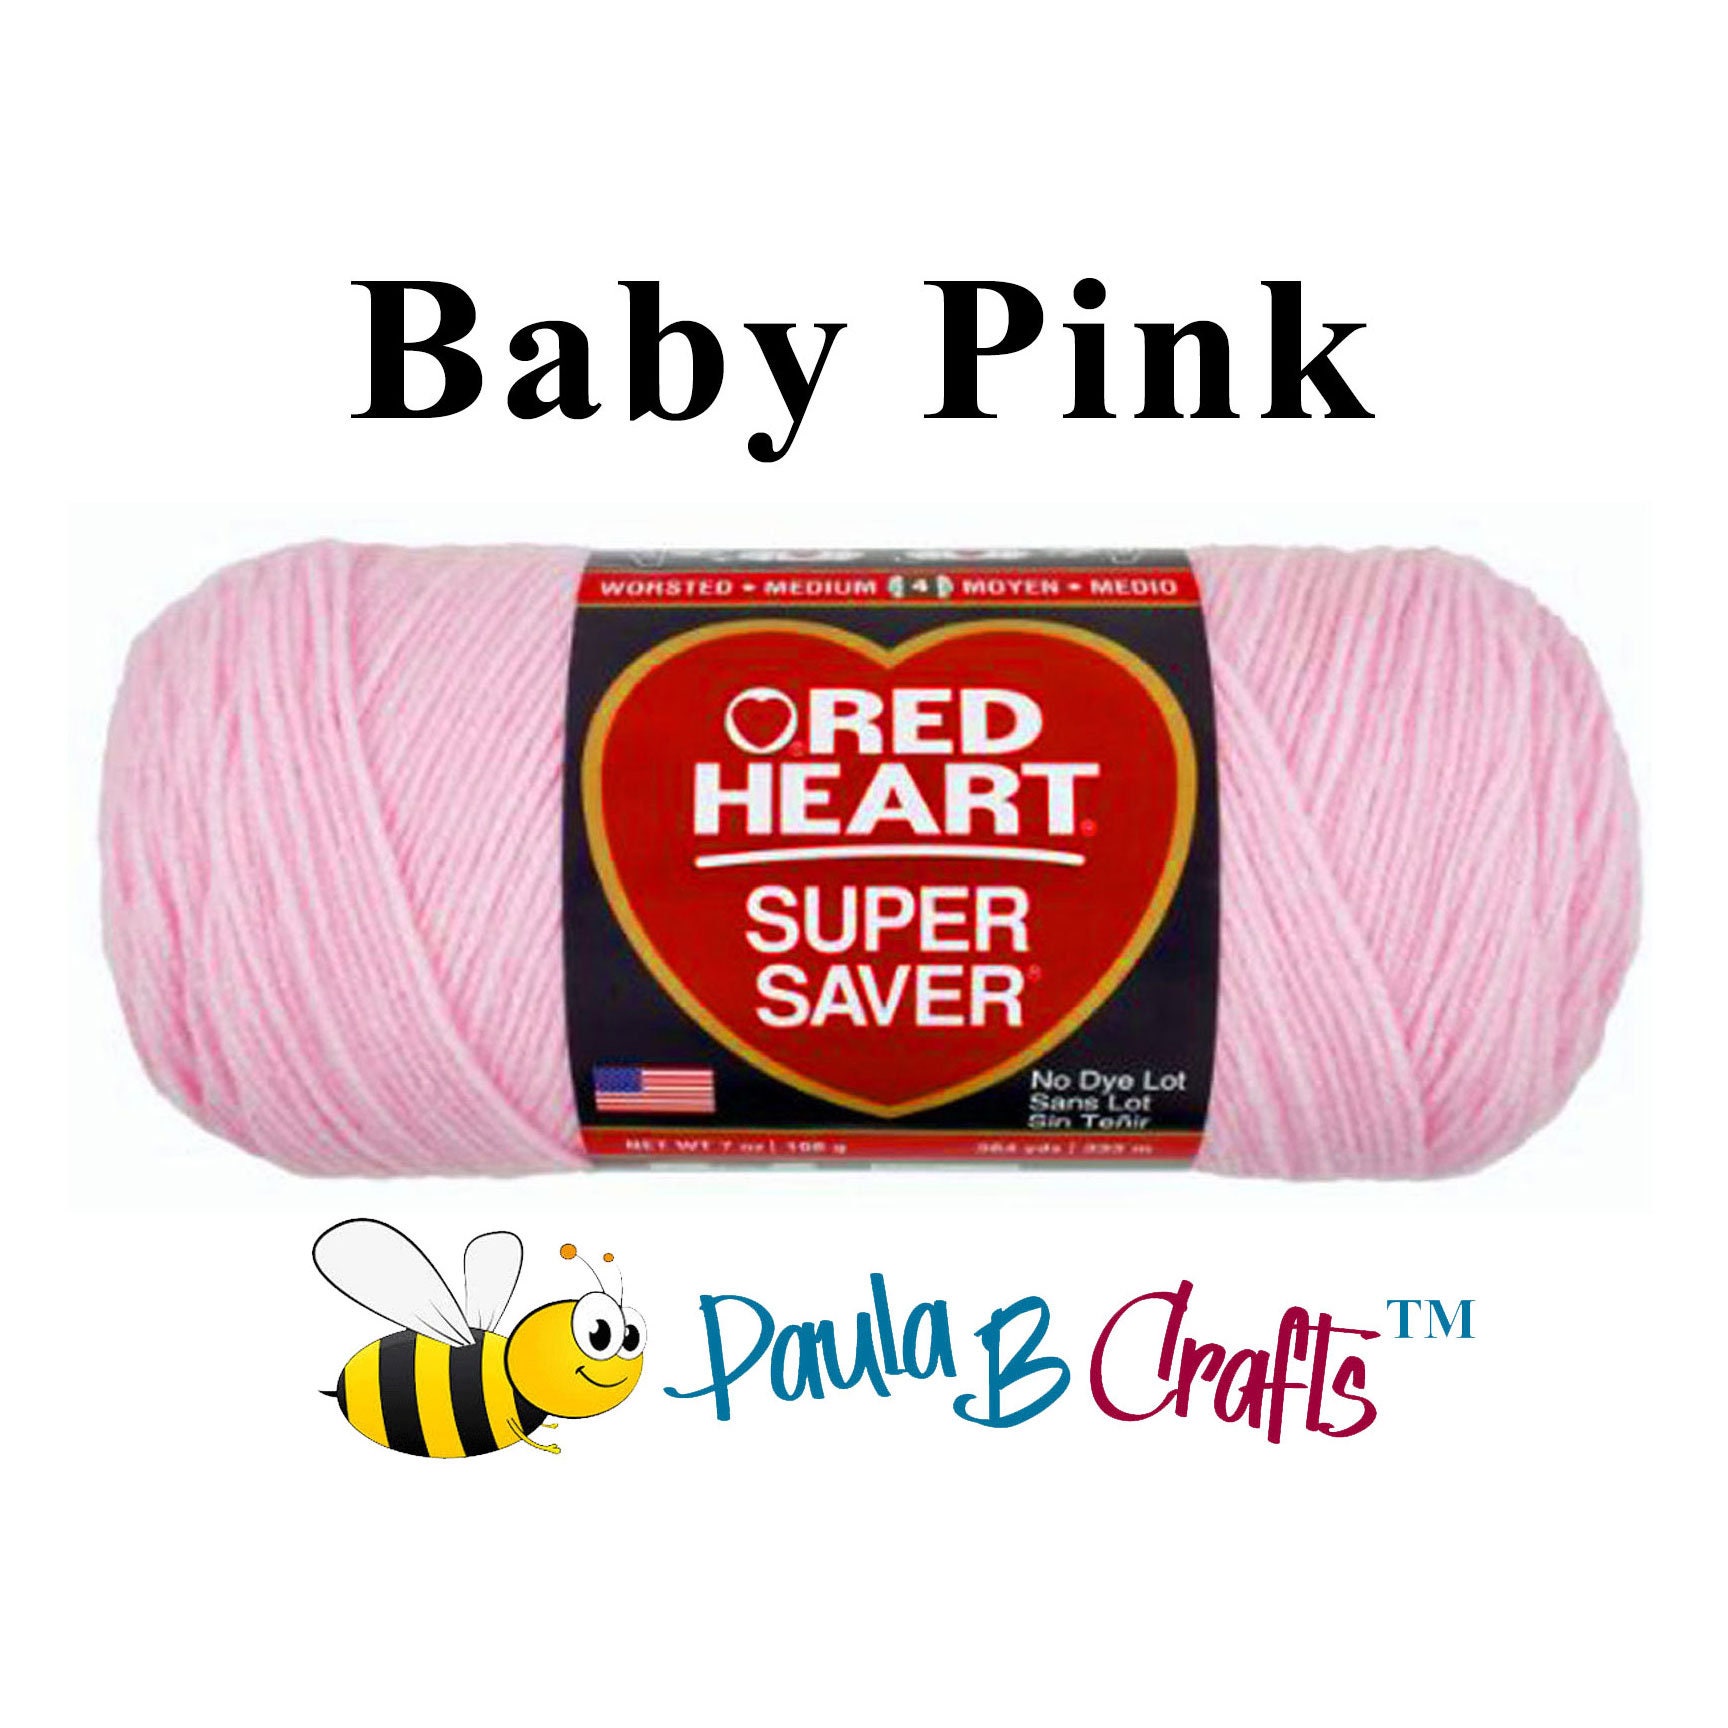 Minty Red Heart Super Saver Yarn